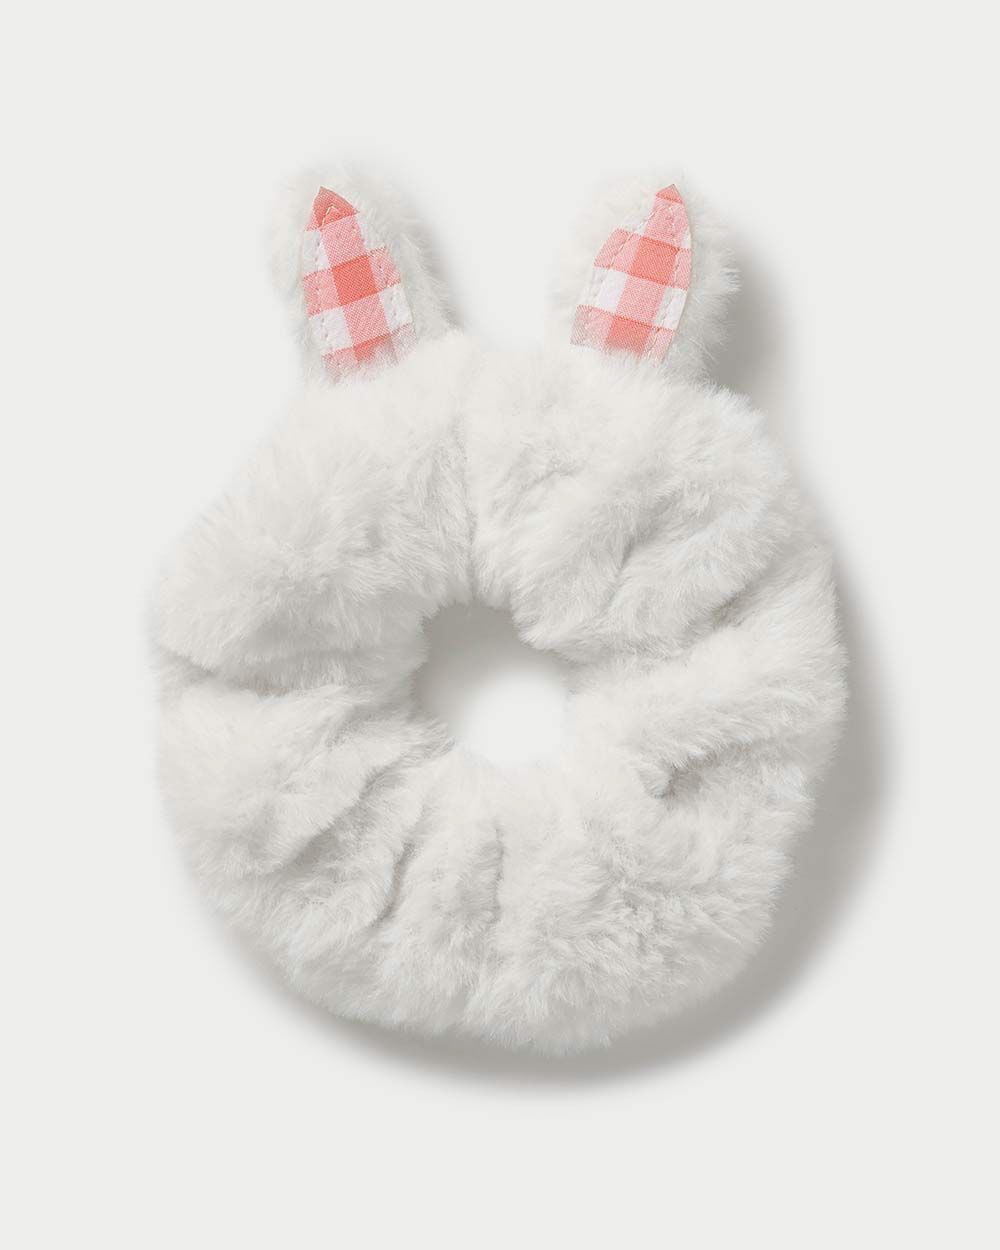 White Bunny Ears Scrunchie - Small Stuff Accessories